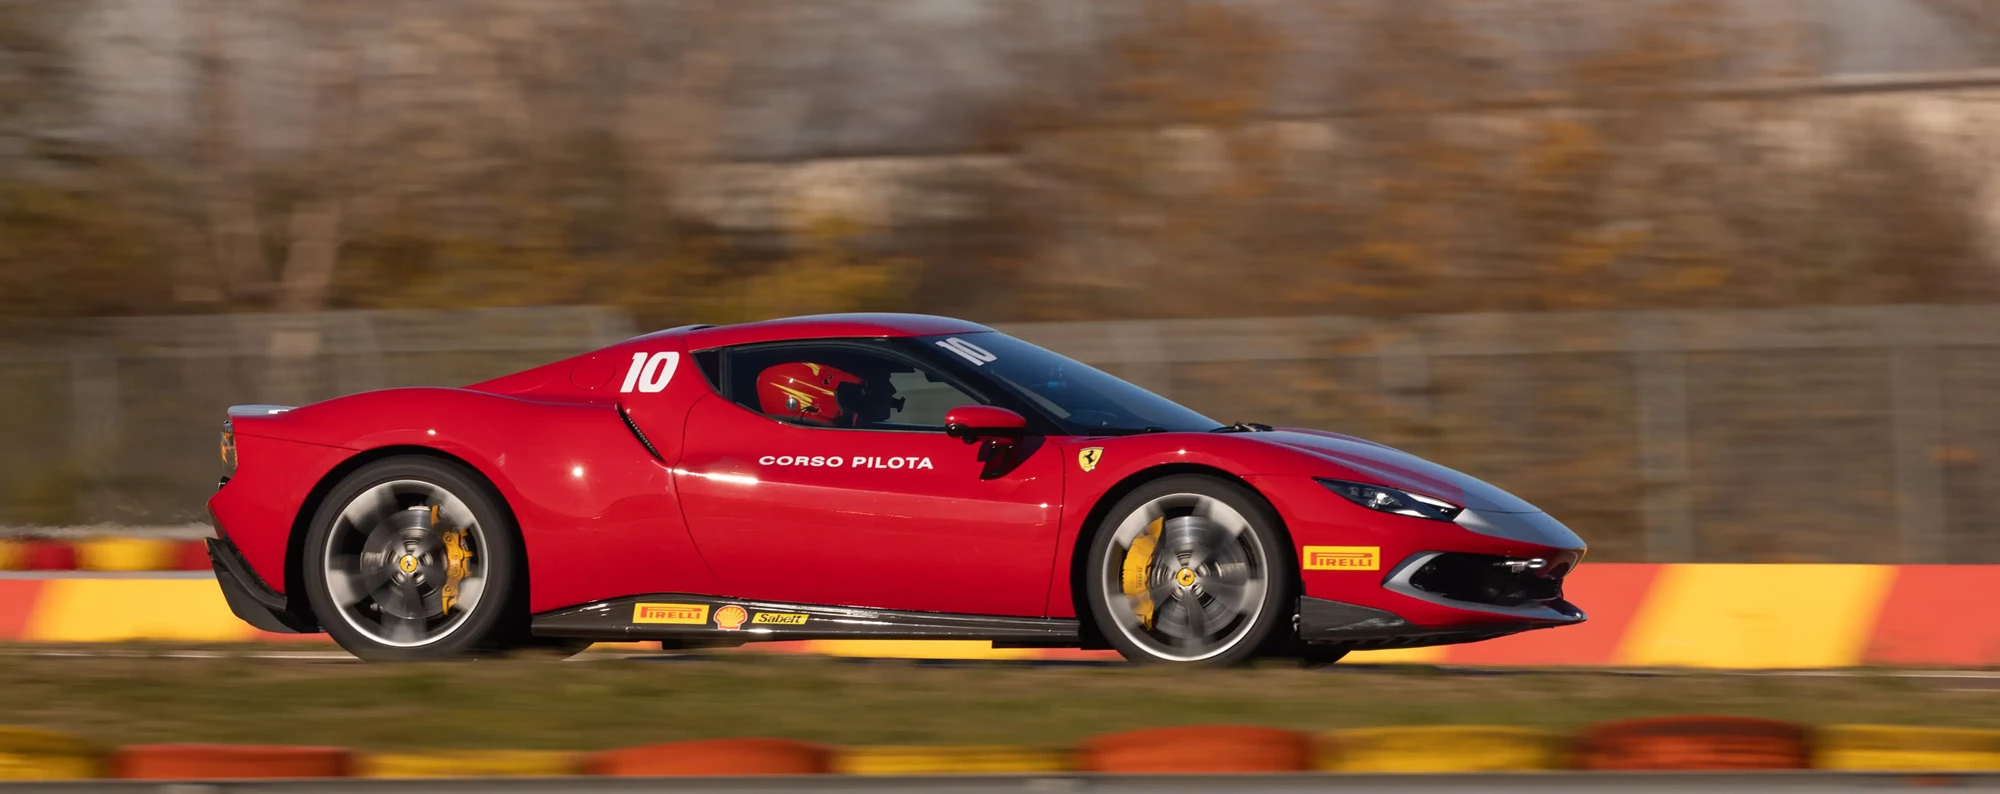 Ferrari Corso Pilota